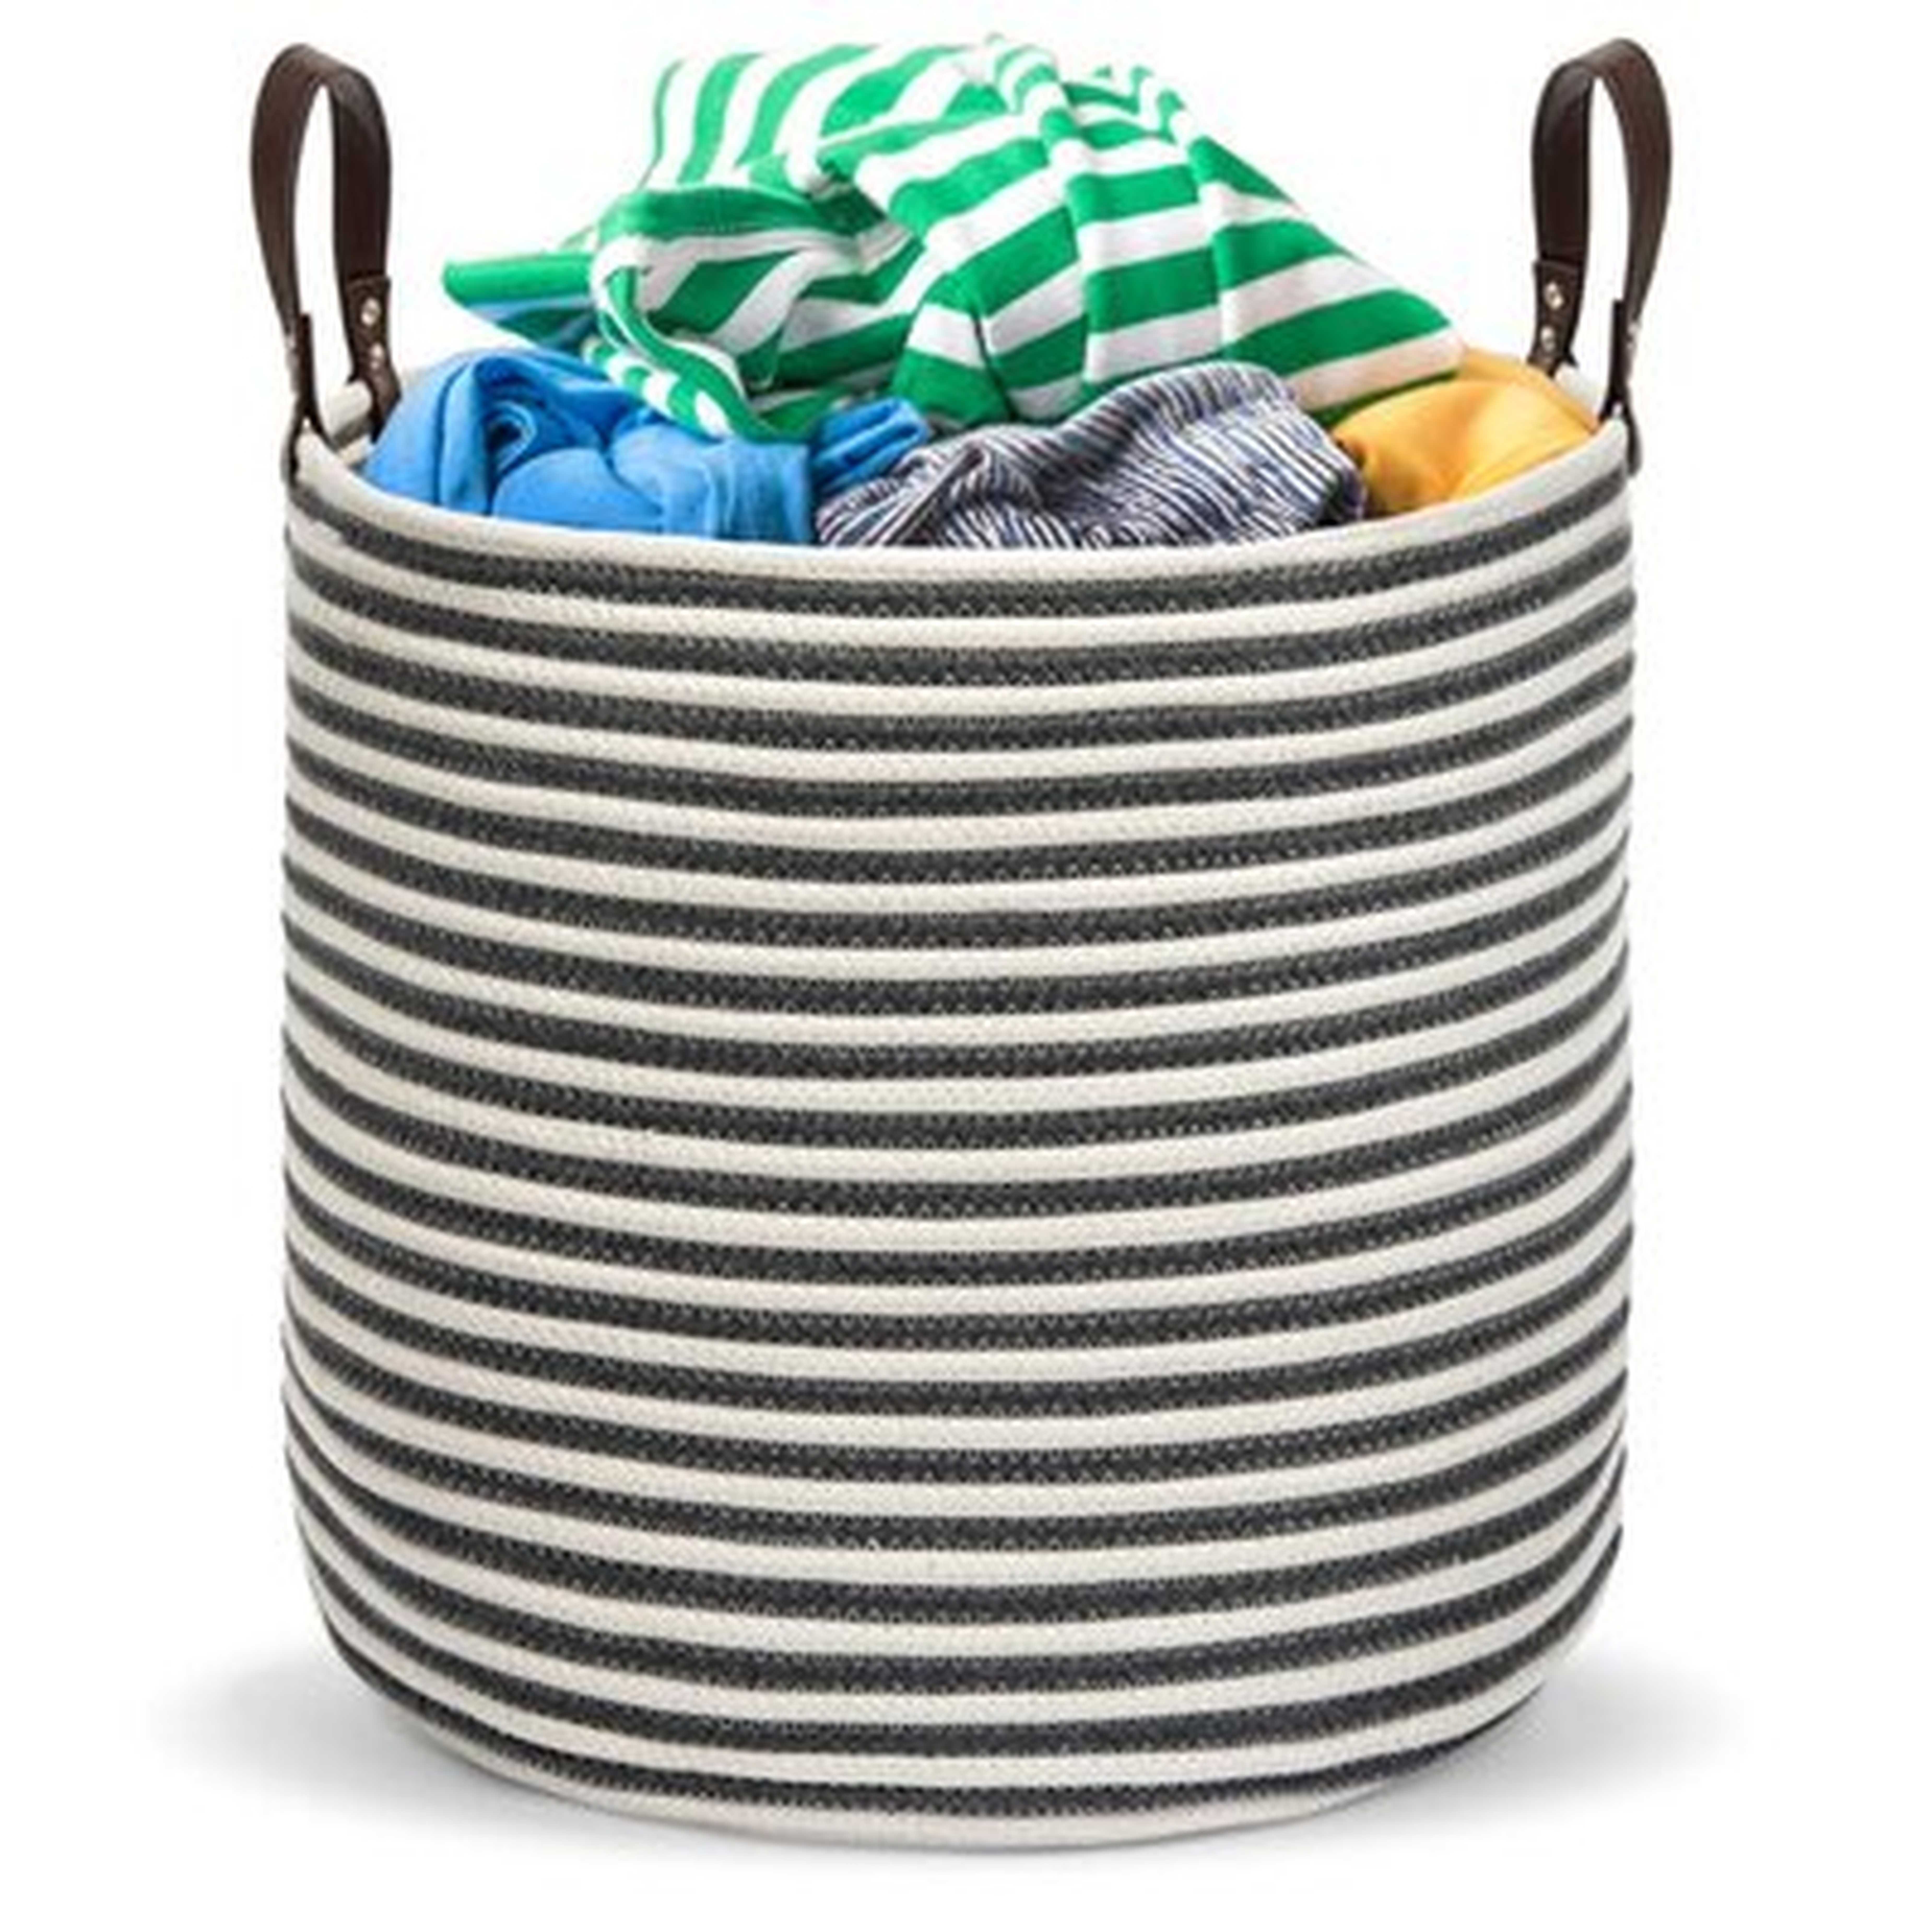 Fabric Basket - Wayfair